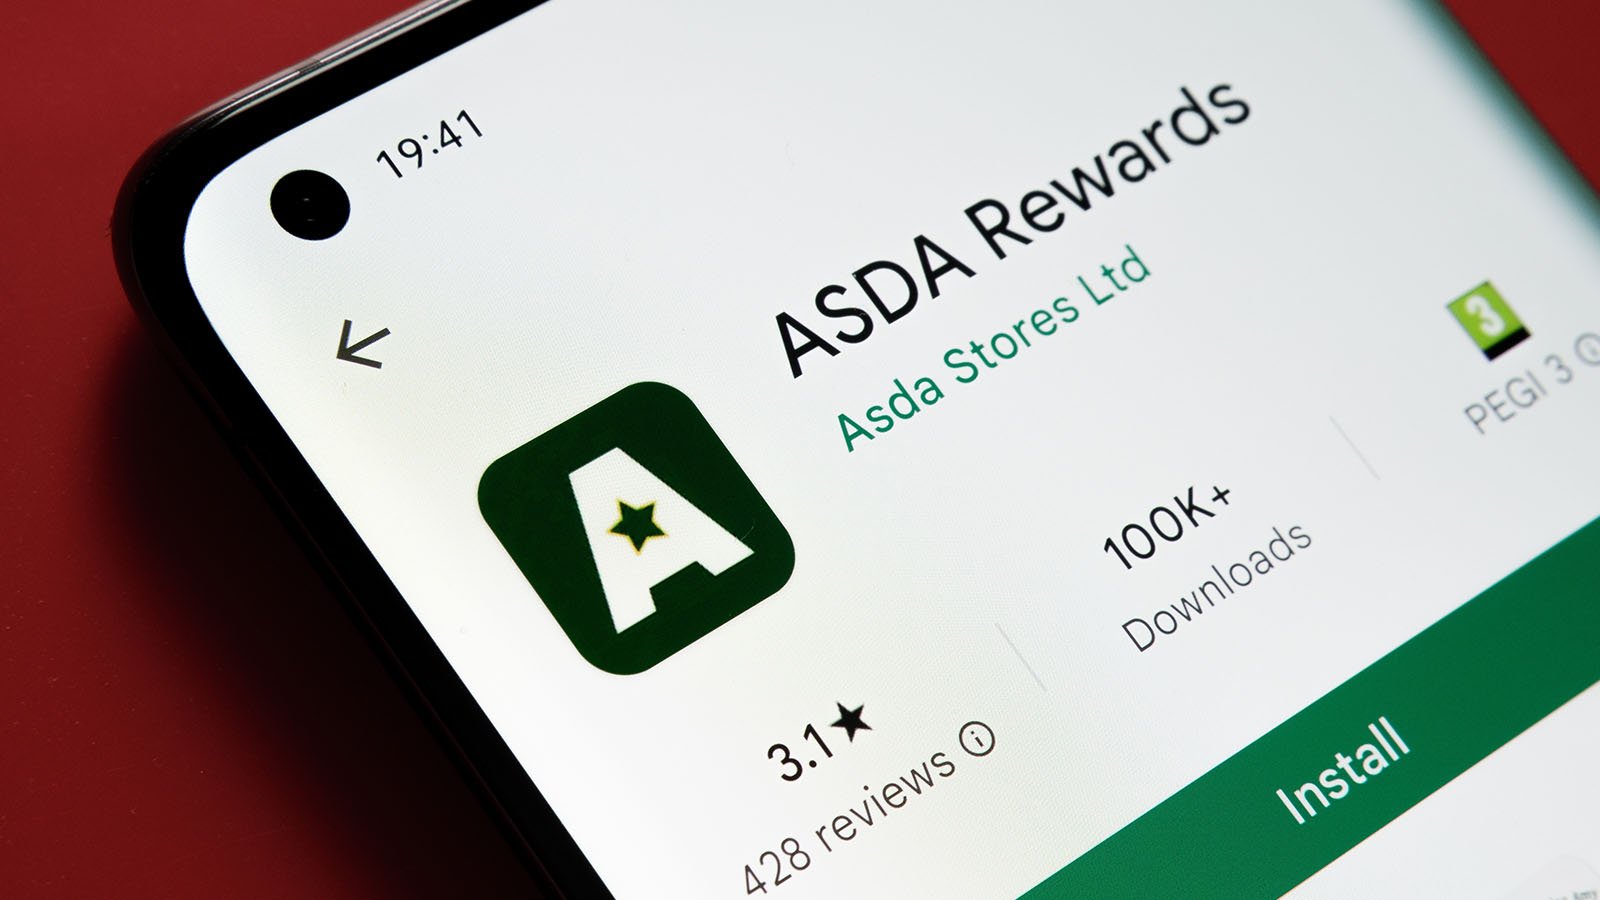 ASDA Rewards app